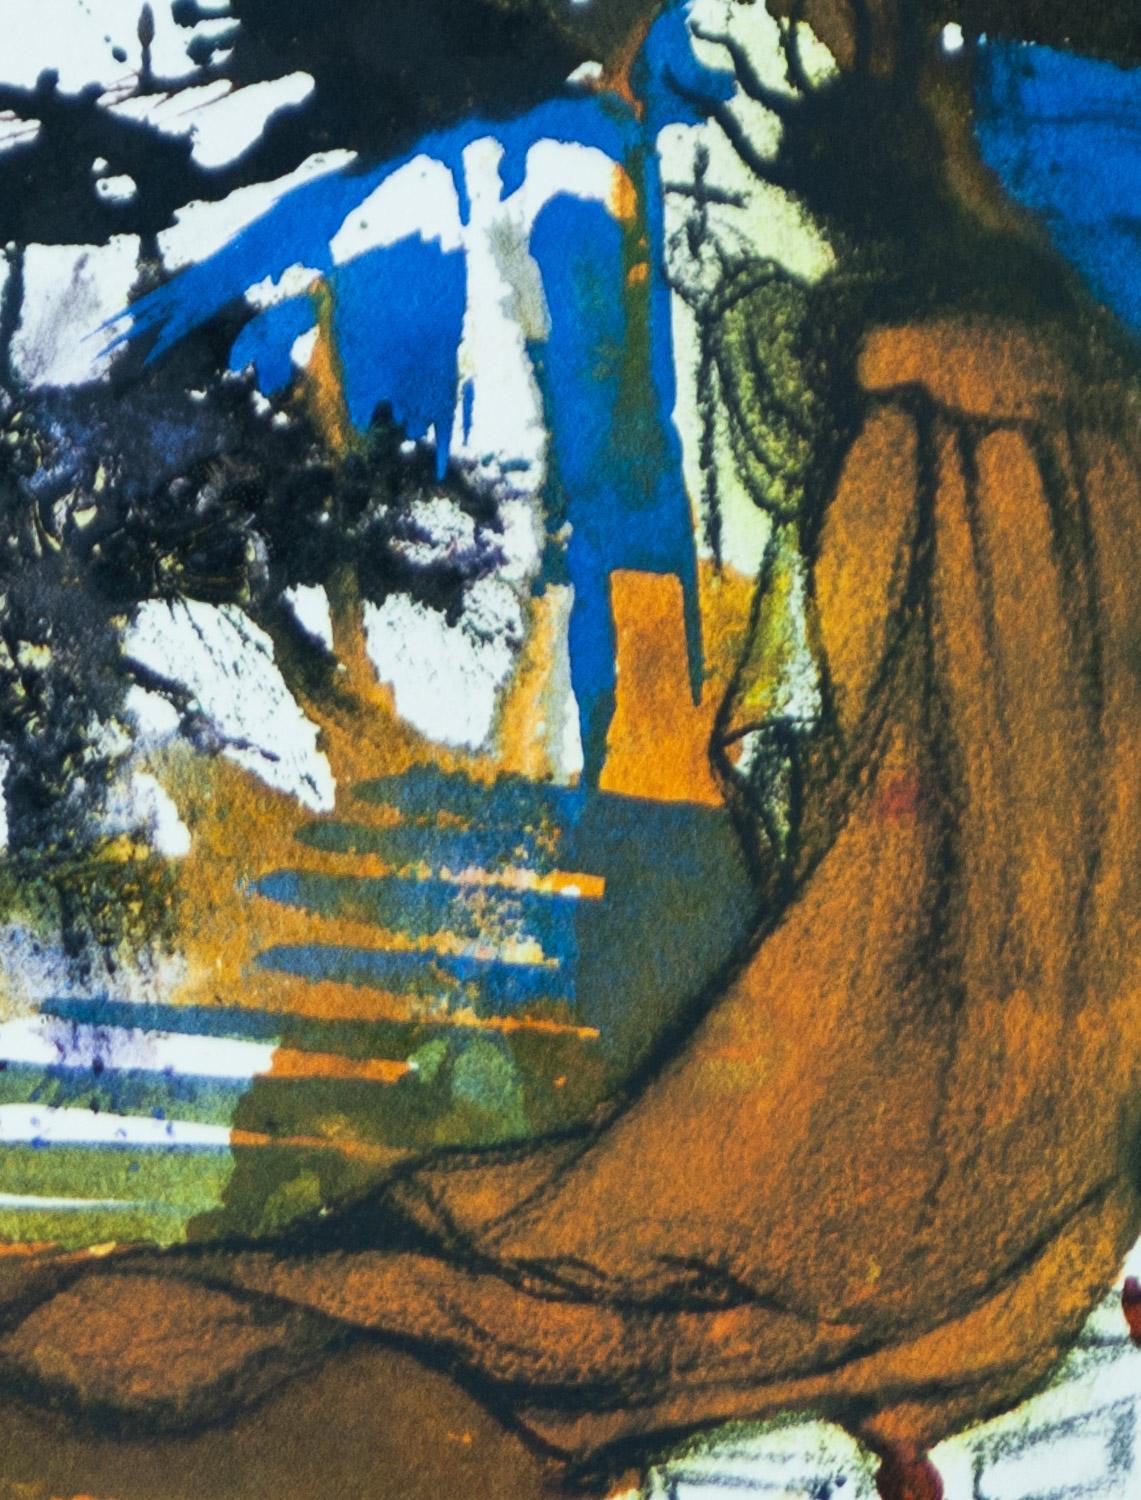 Das Chosen Vineyard,  Biblia Sacra Salvador Dali Lithographie 1964 (Surrealismus), Print, von Salvador Dalí